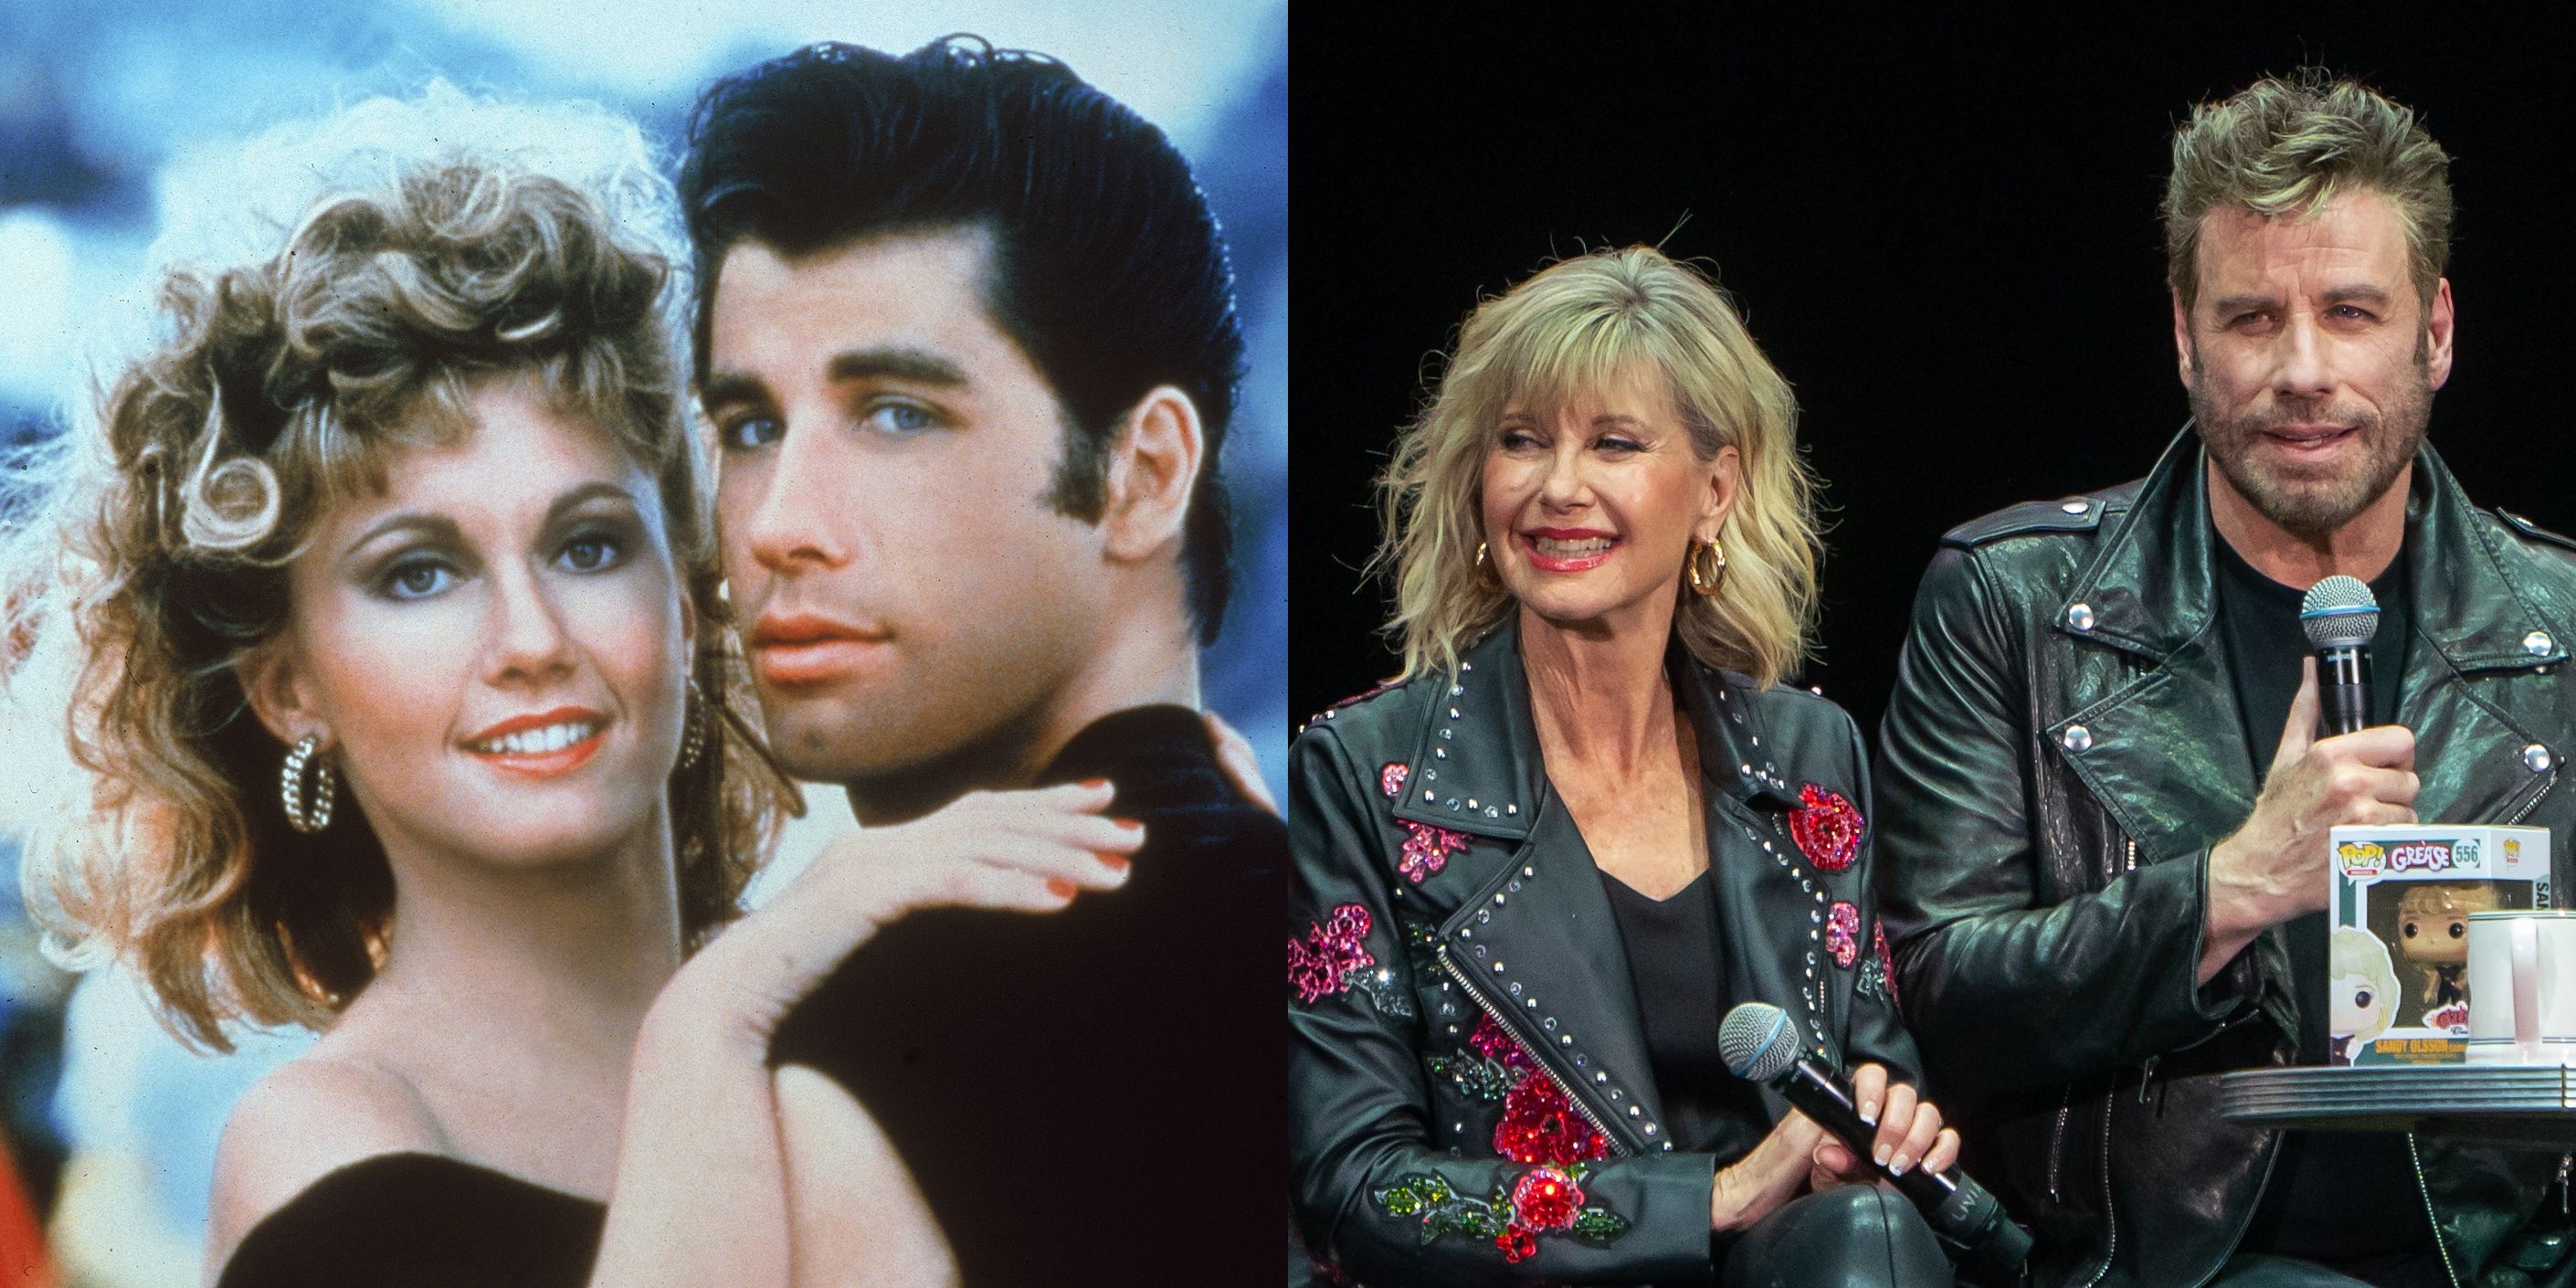 The Grease Reunion Featured John Travolta And Olivia Newton